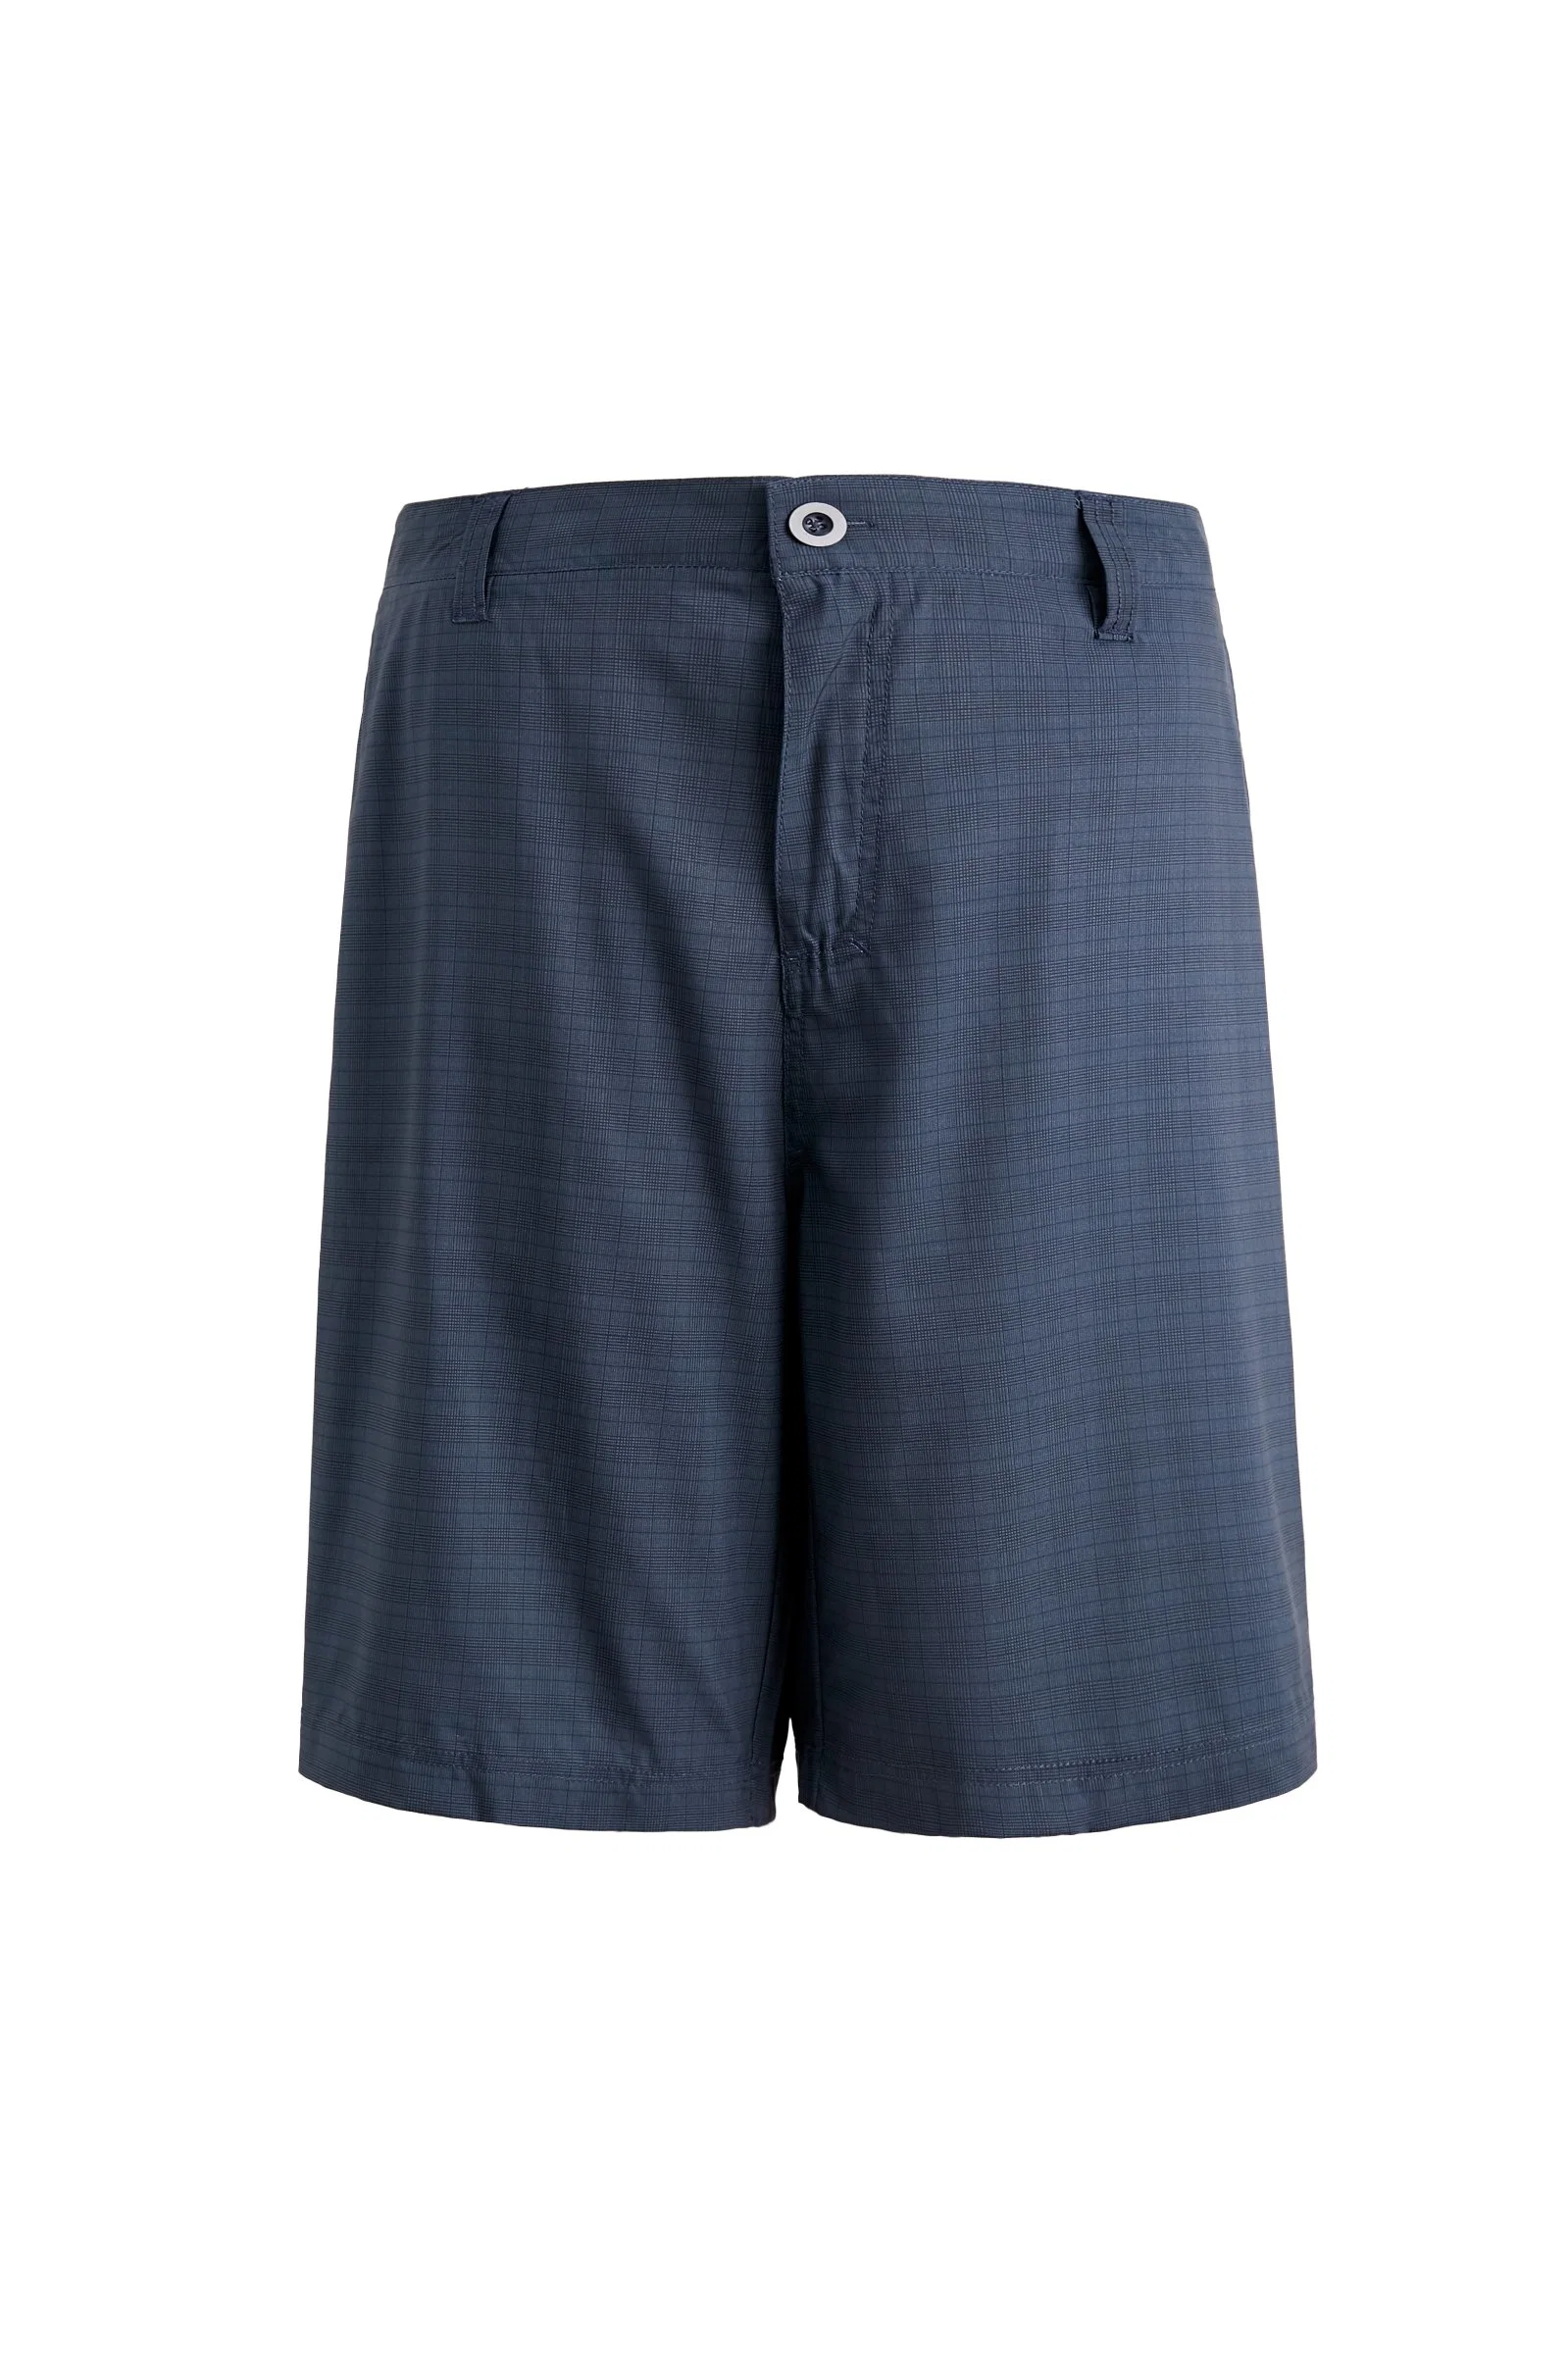 Herren kurze Hosen hohe Qualität Mode Custom stilvolle Zipper Pocket Style Sport Athletic Shorts